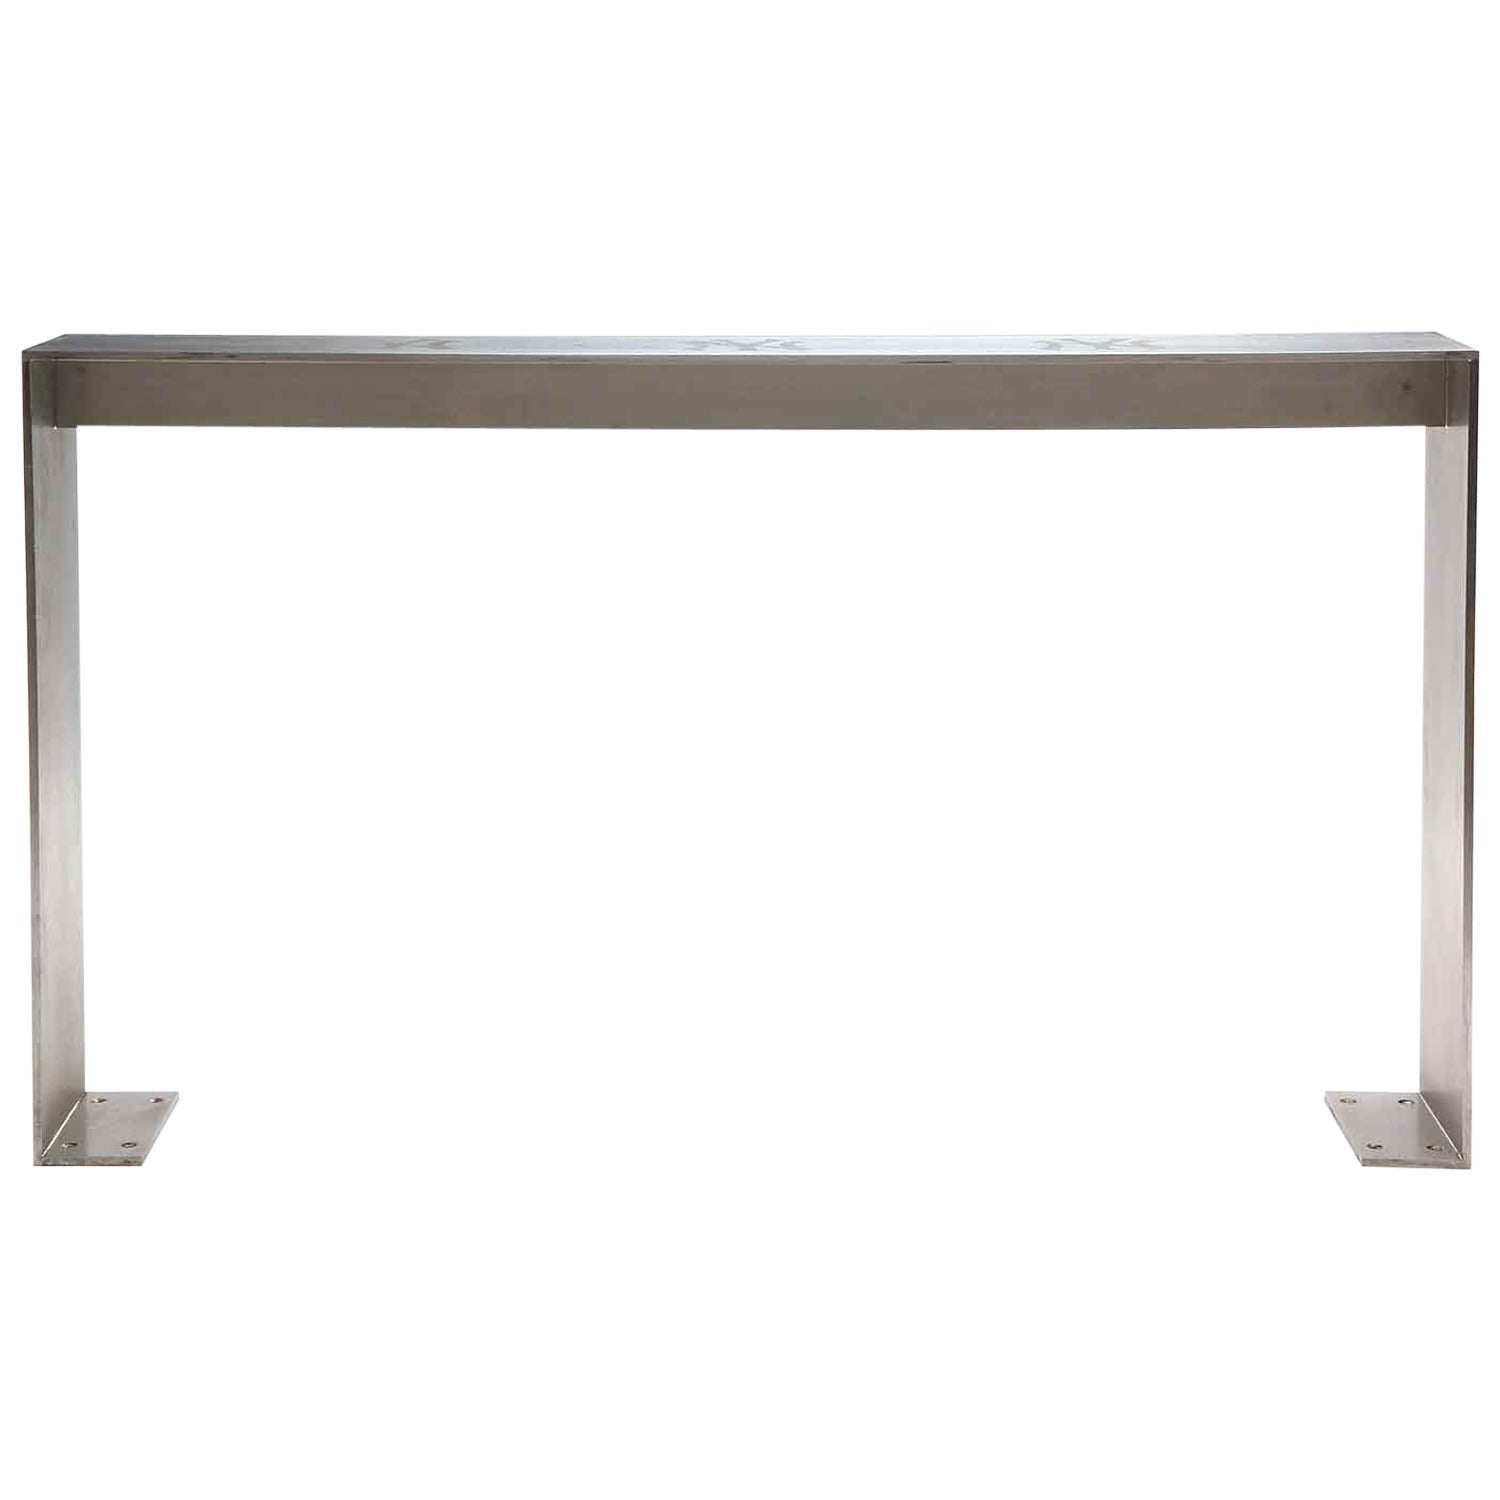 1980s Minimalist Steel Table from Yankee Stadium For Sale